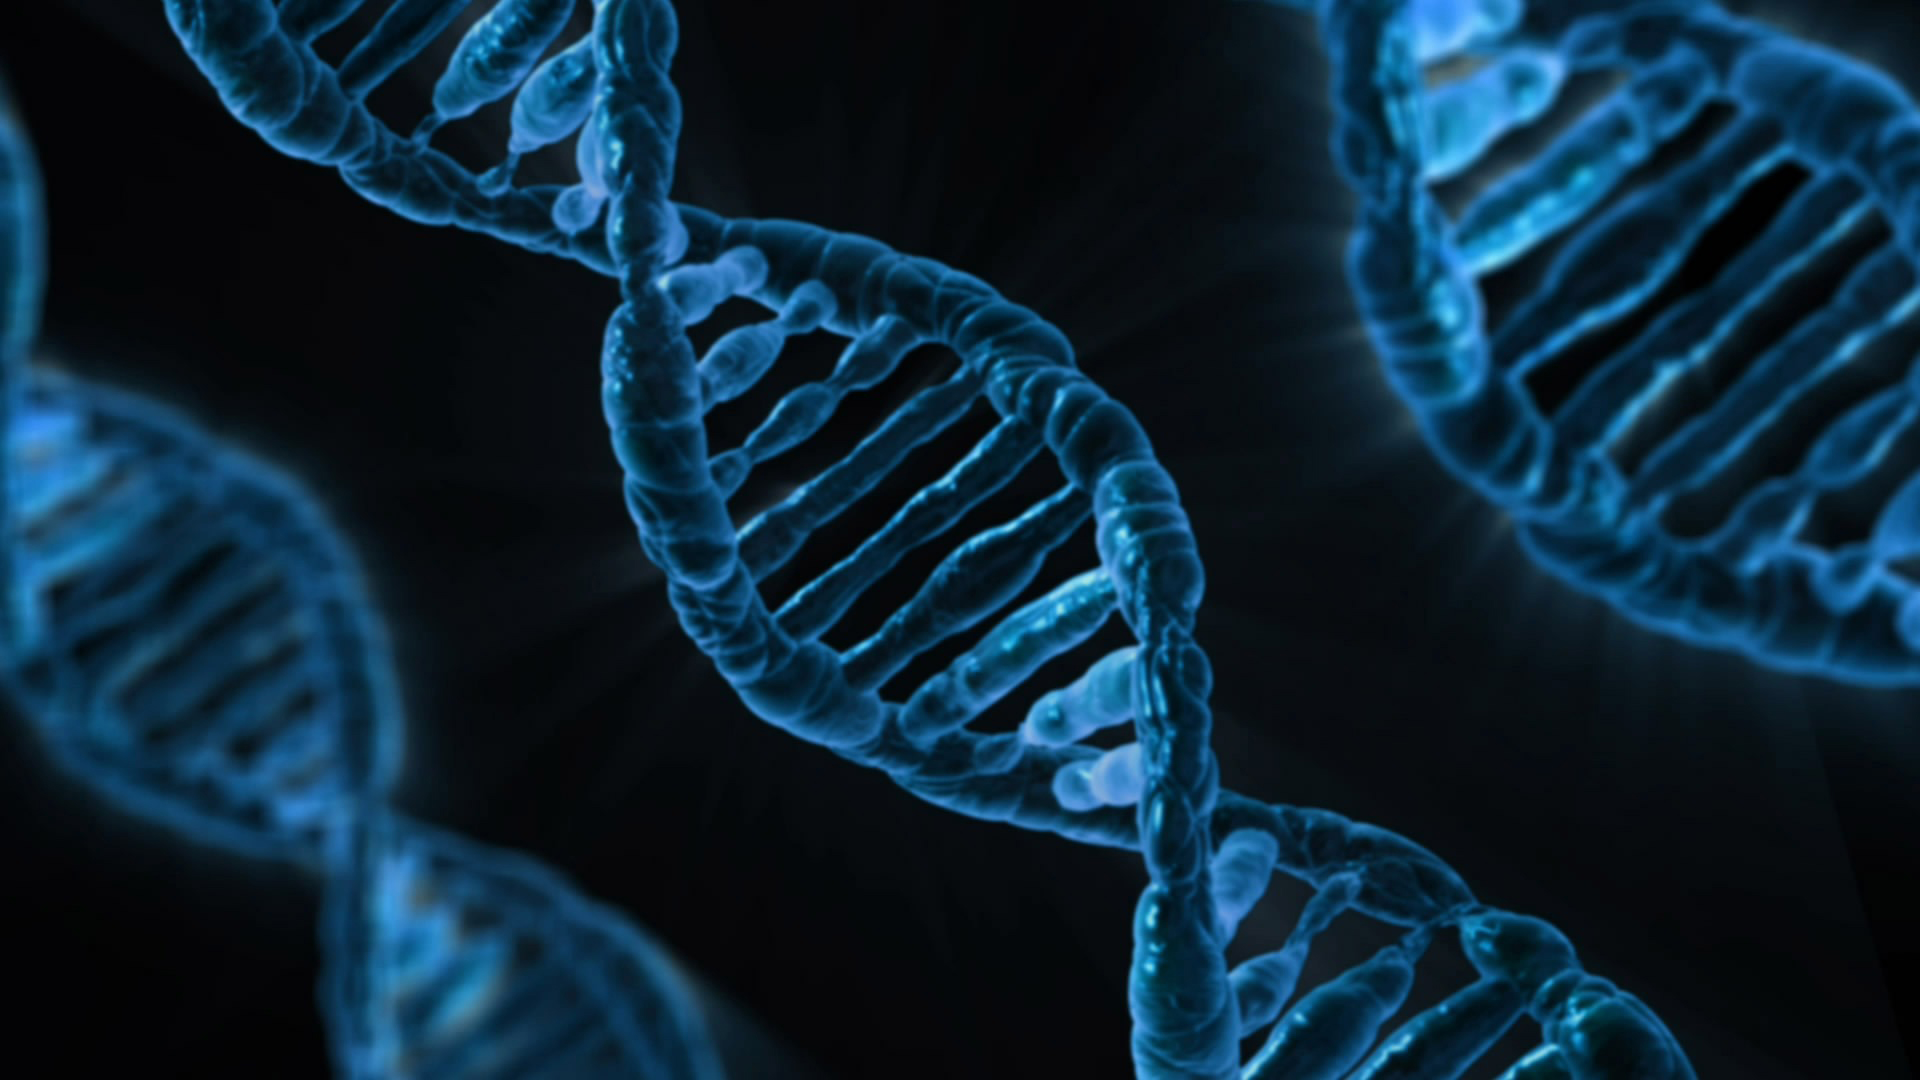 AstraZeneca optimise hits via DNA encoded library screening